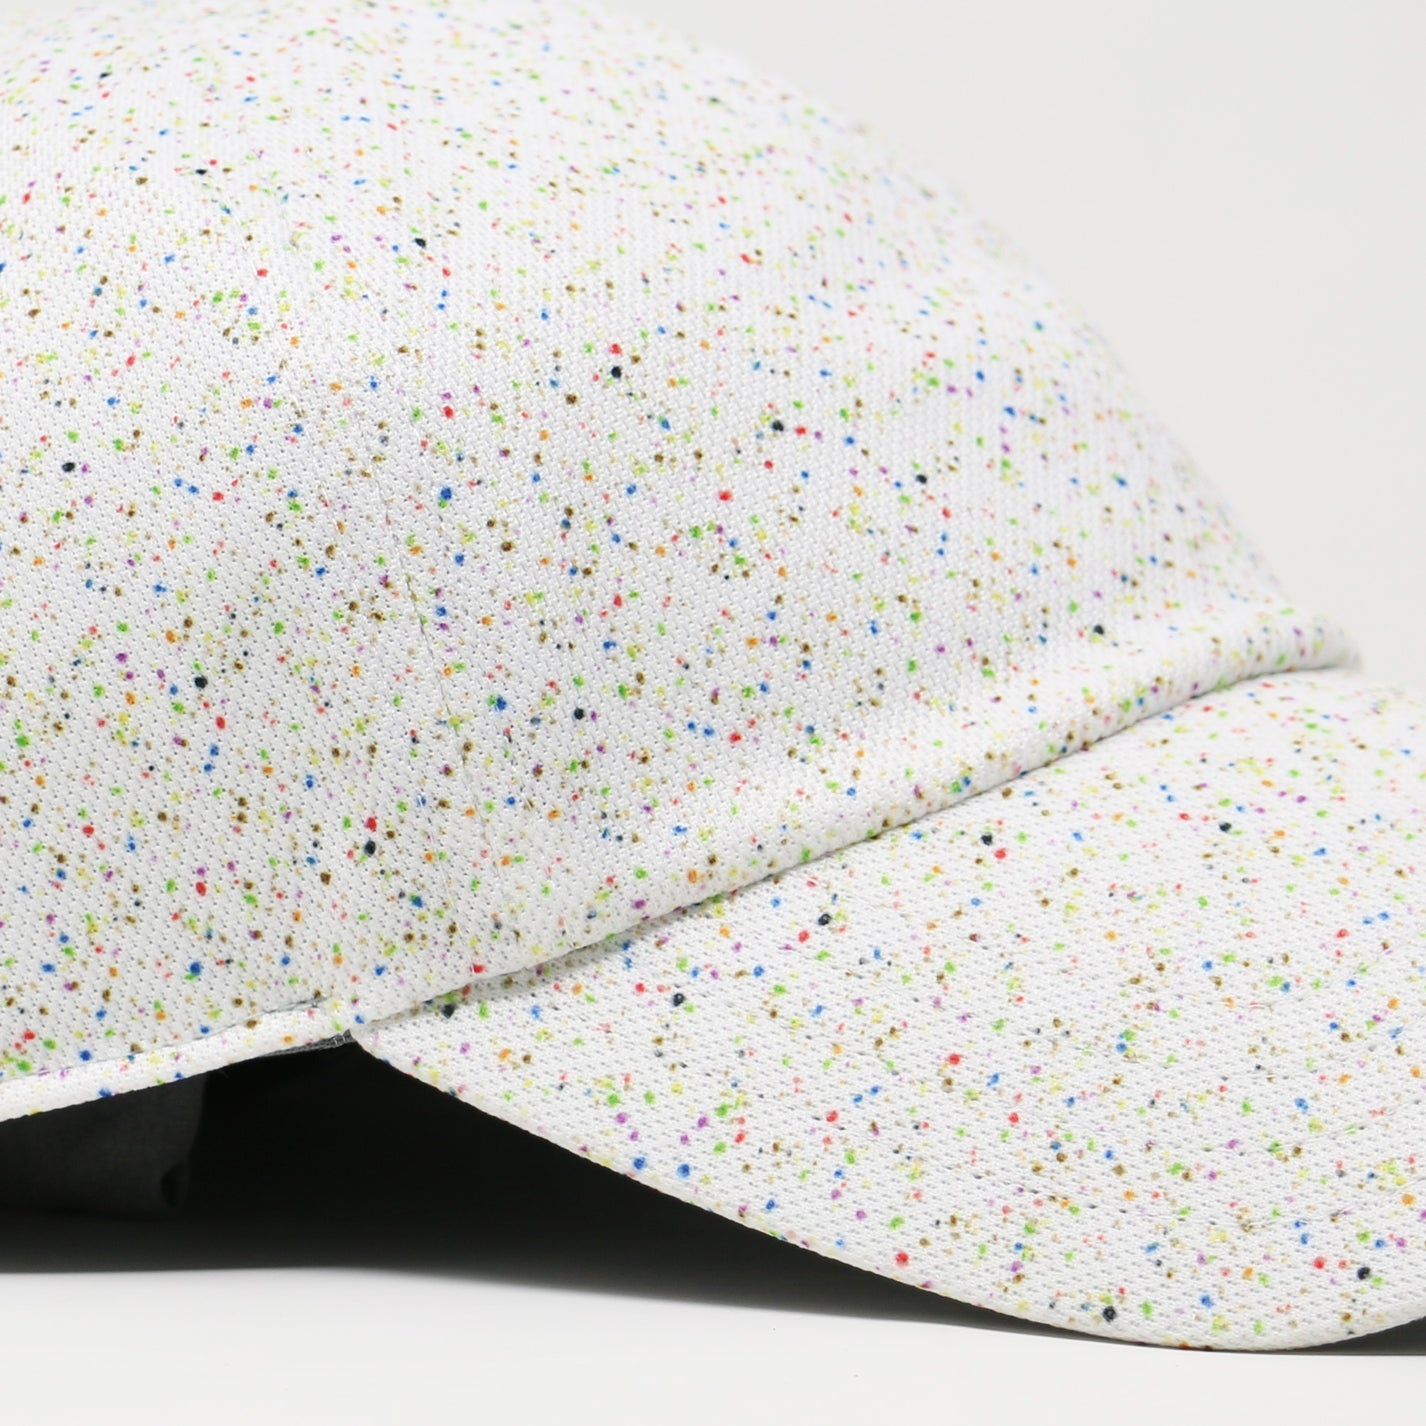 Rainbow Specks – storied hats